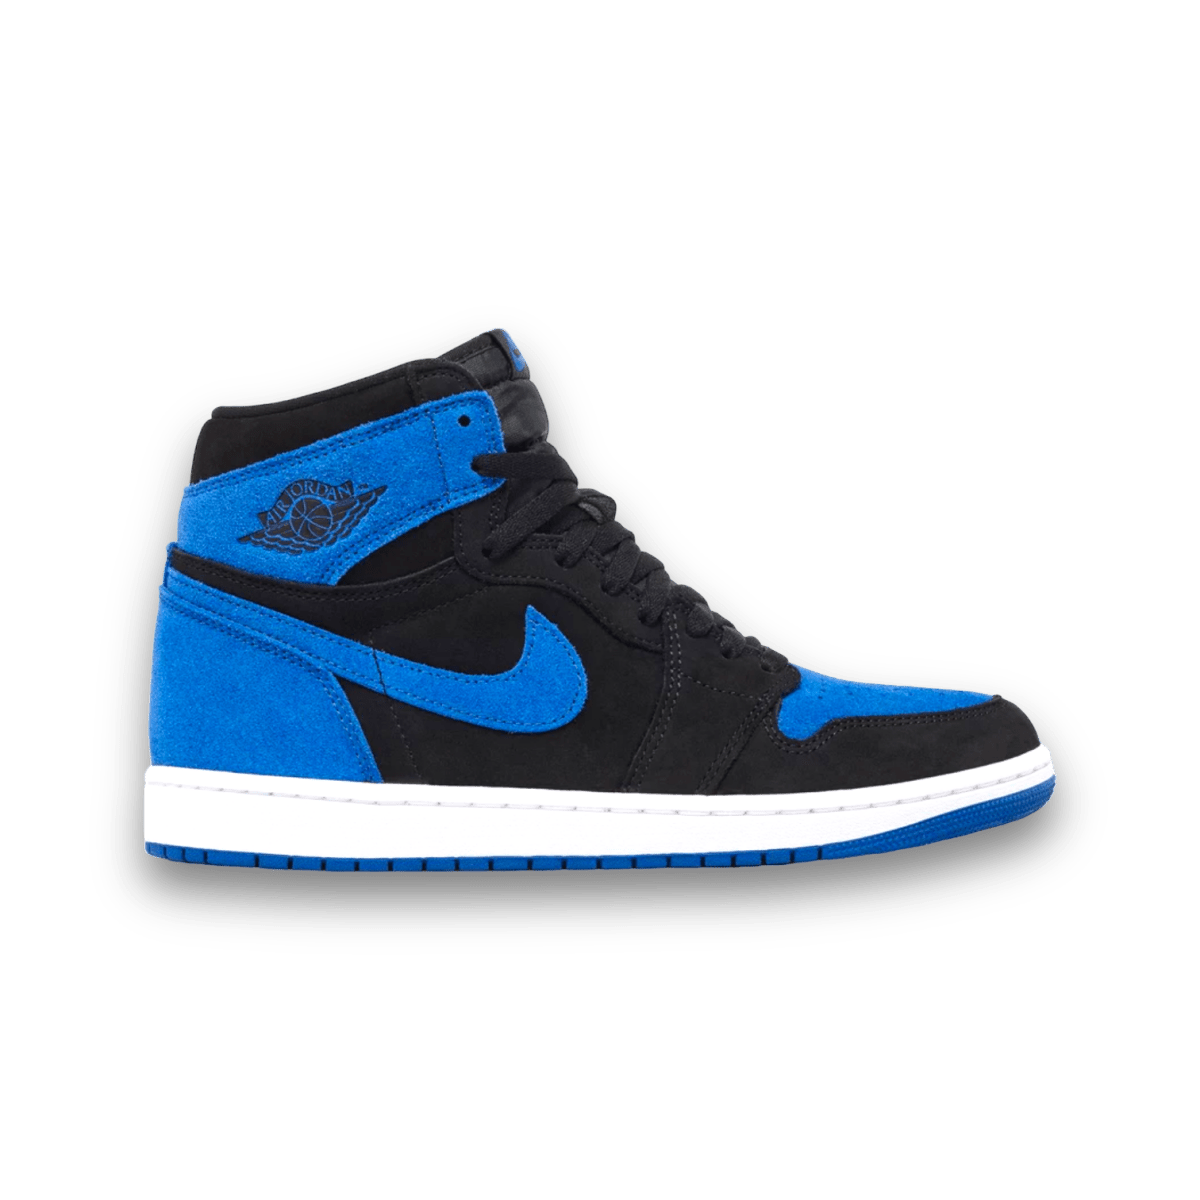 Jordan 1 High OG "Royal Reimagined" - High Sneaker - Jawns on Fire Sneakers & Streetwear